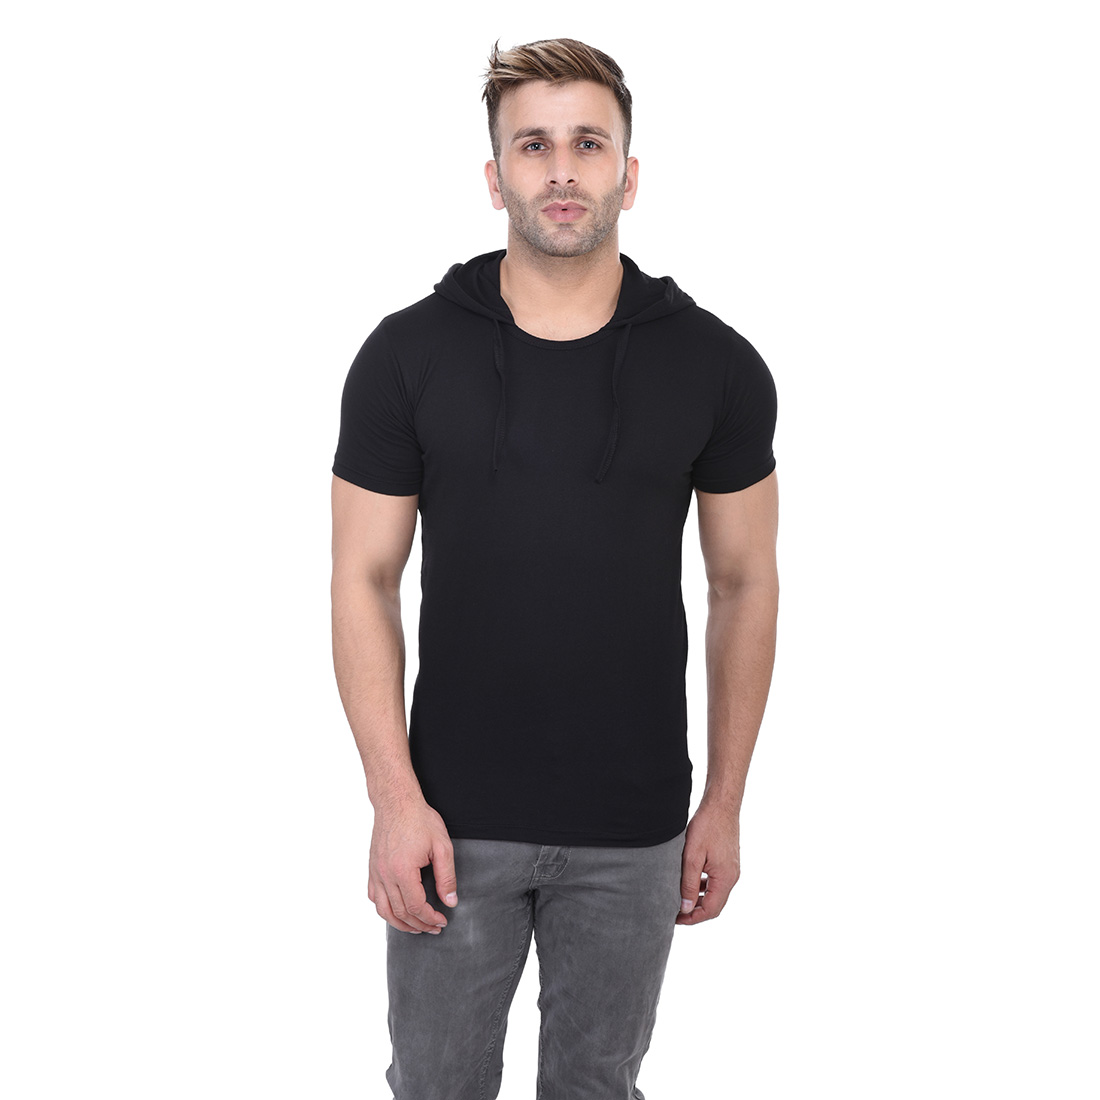 Buy Bi Fashion Men's Black Hooded t-shirt Online @ ₹499 from ShopClues